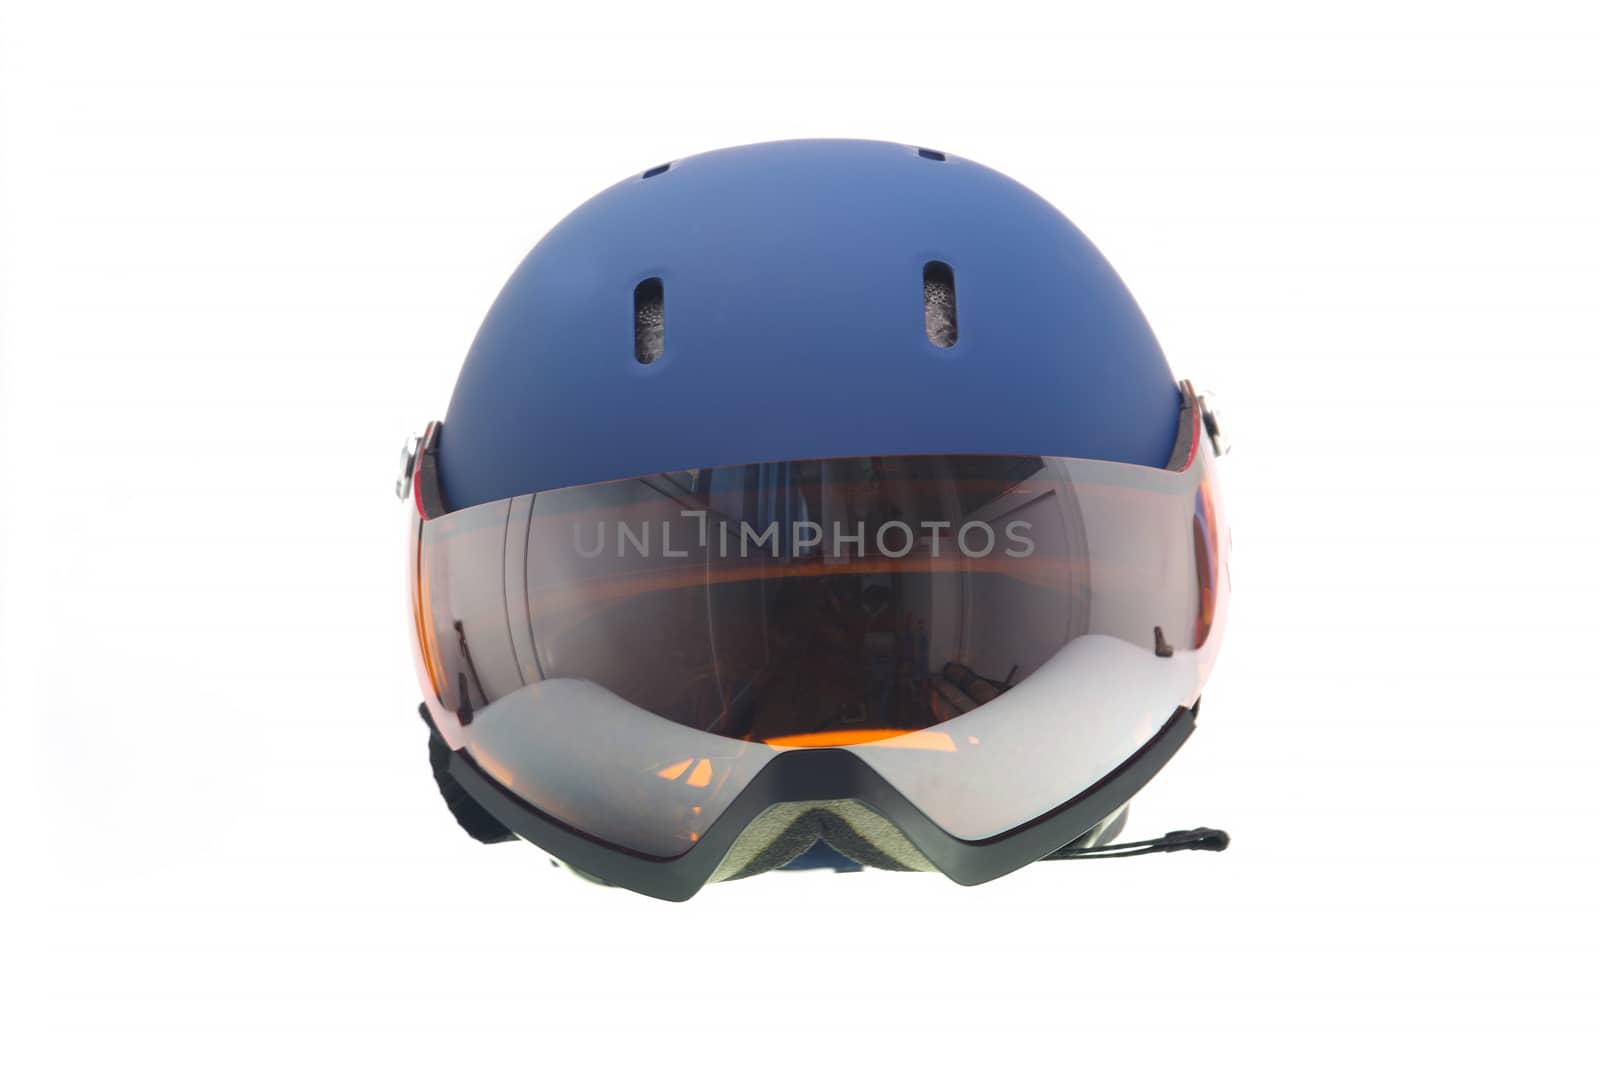 Protective ski helmet and goggle by savcoco